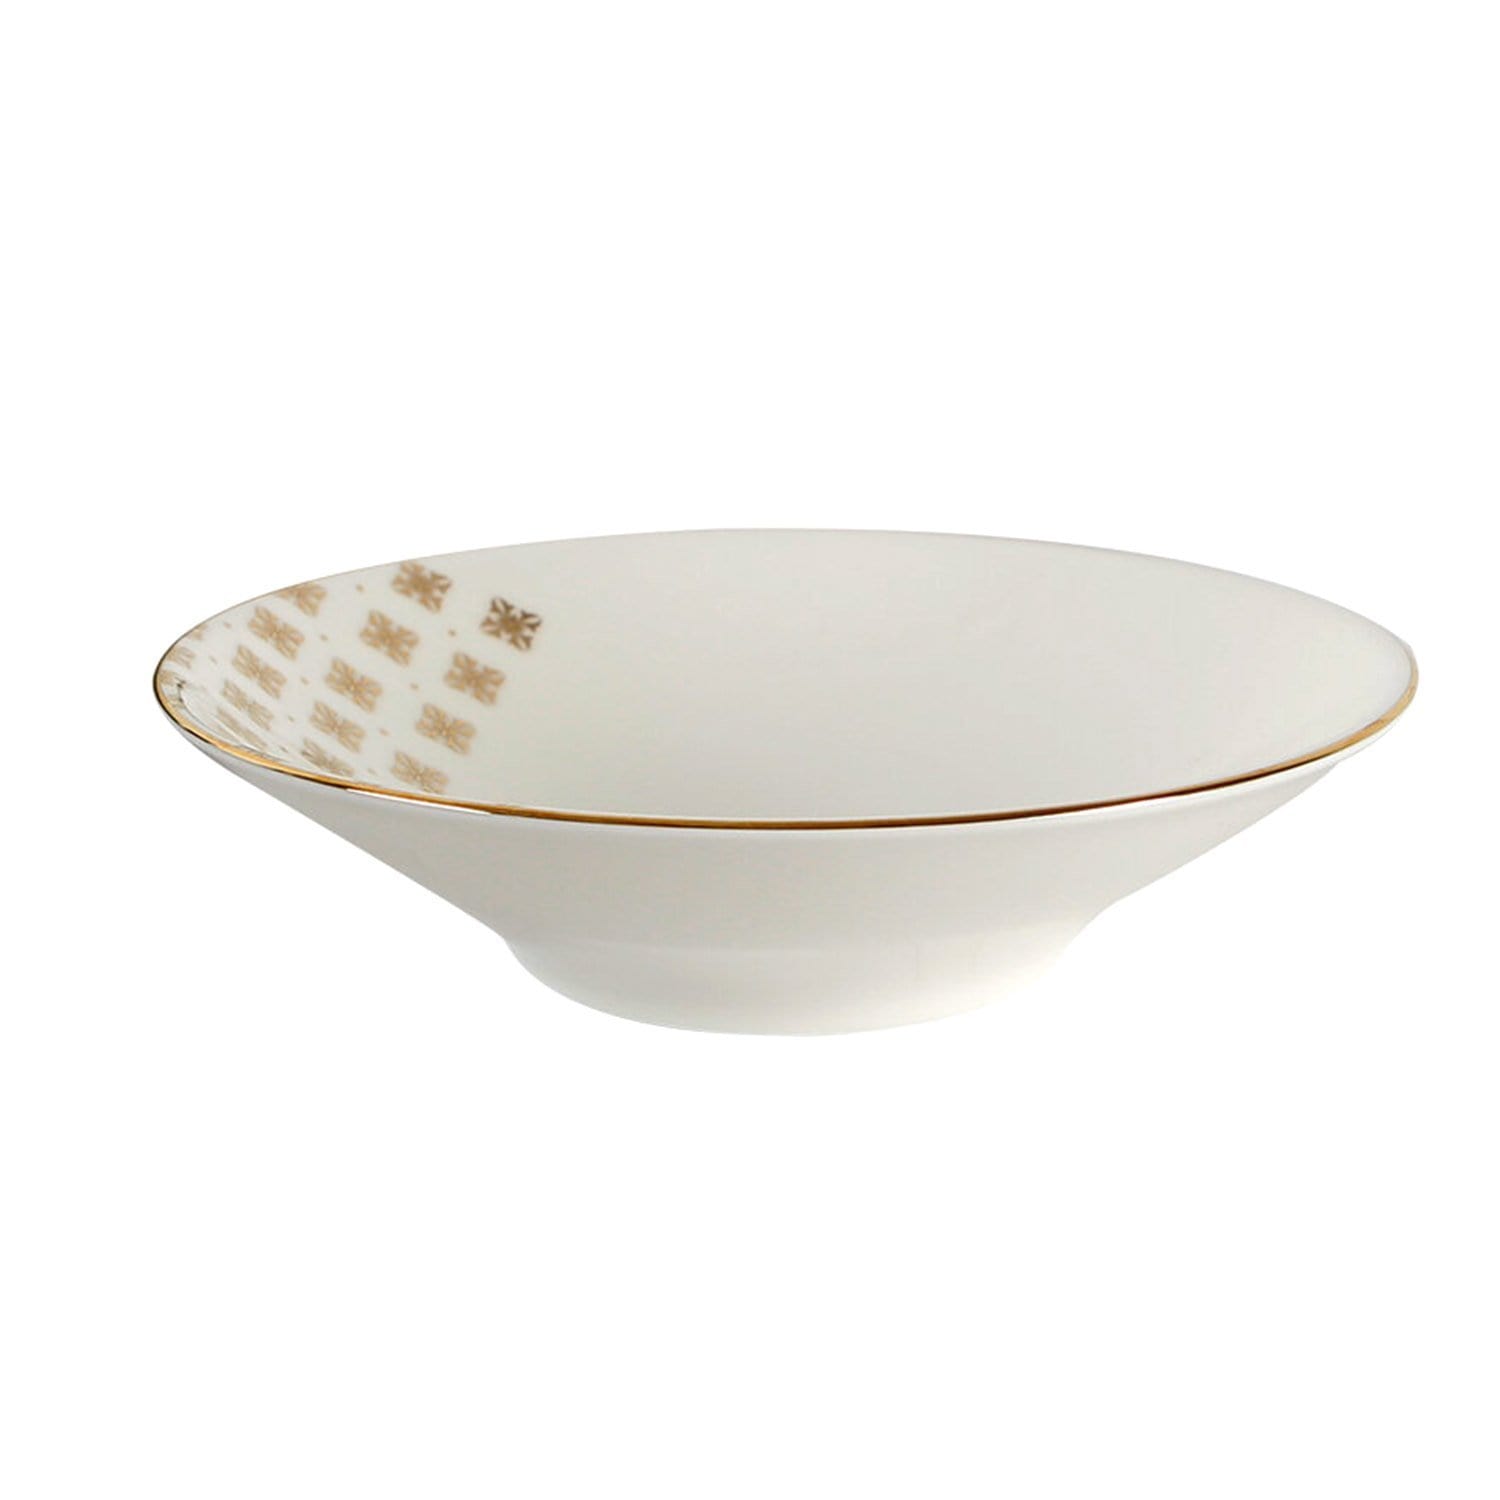 Porland Porselen Evoke 19 cm Deep Plate - Cream and Gold - 04ALM002707 - Jashanmal Home